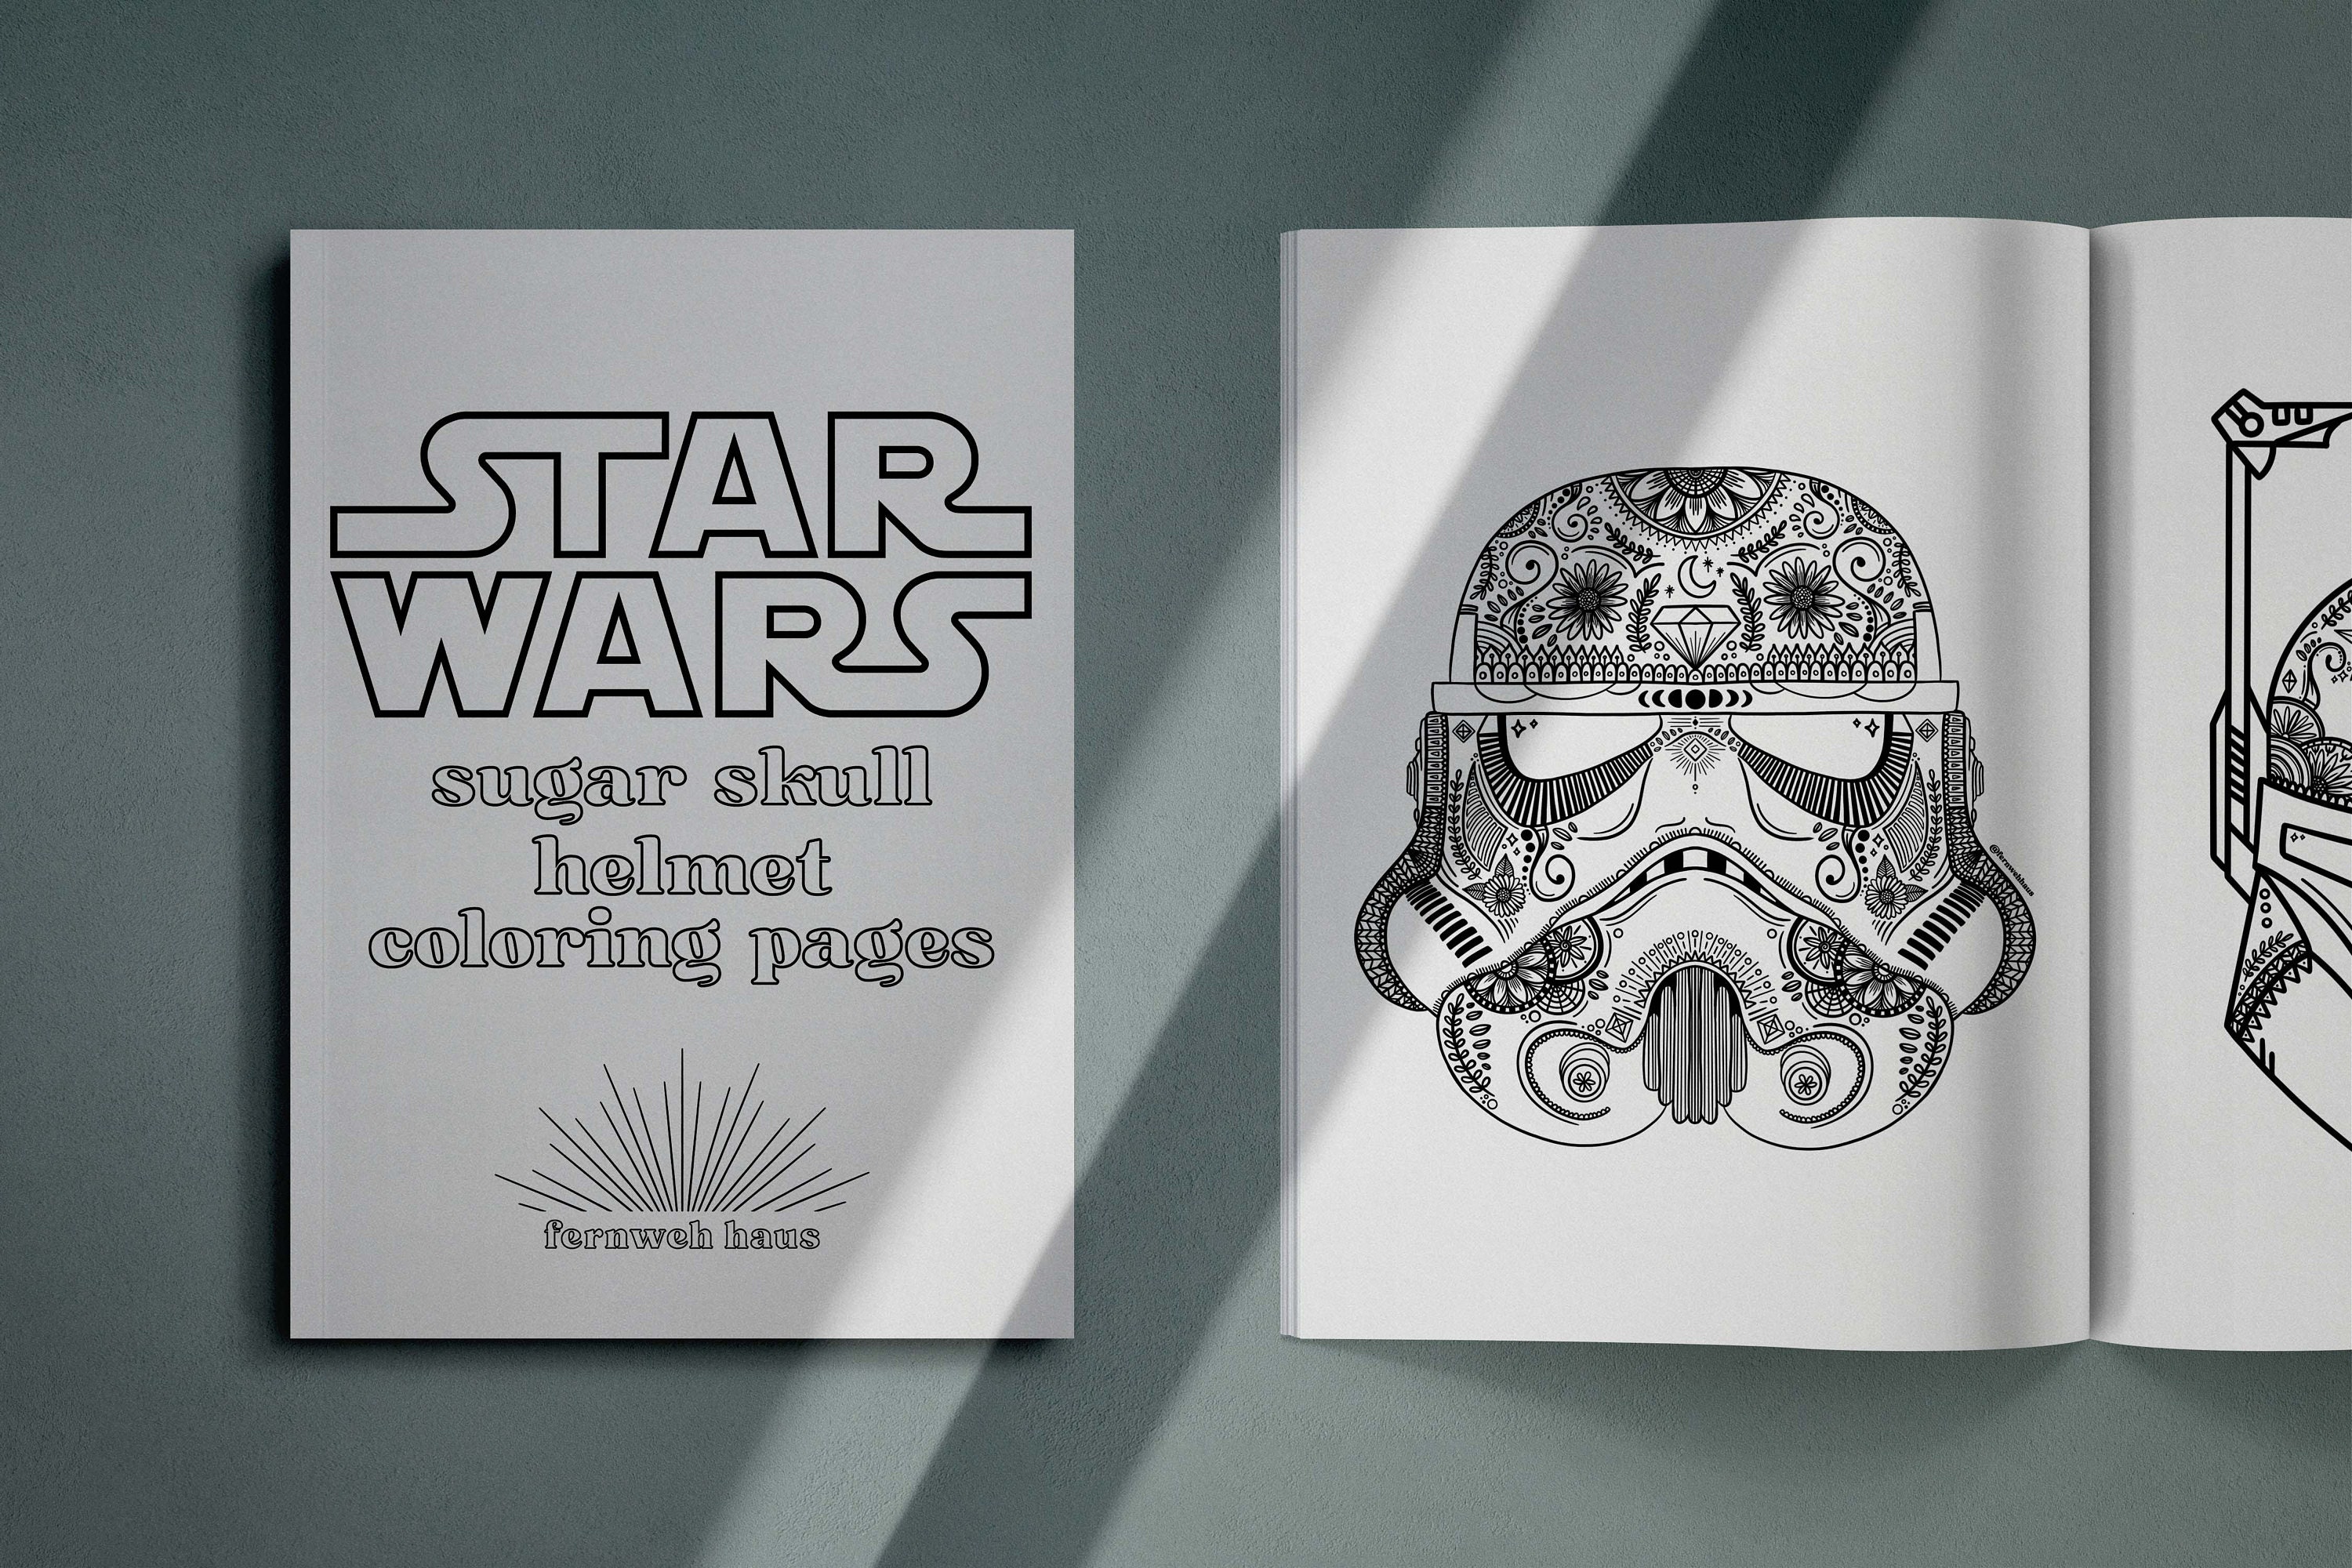 Star wars sugar skull helmet coloring pages digital download